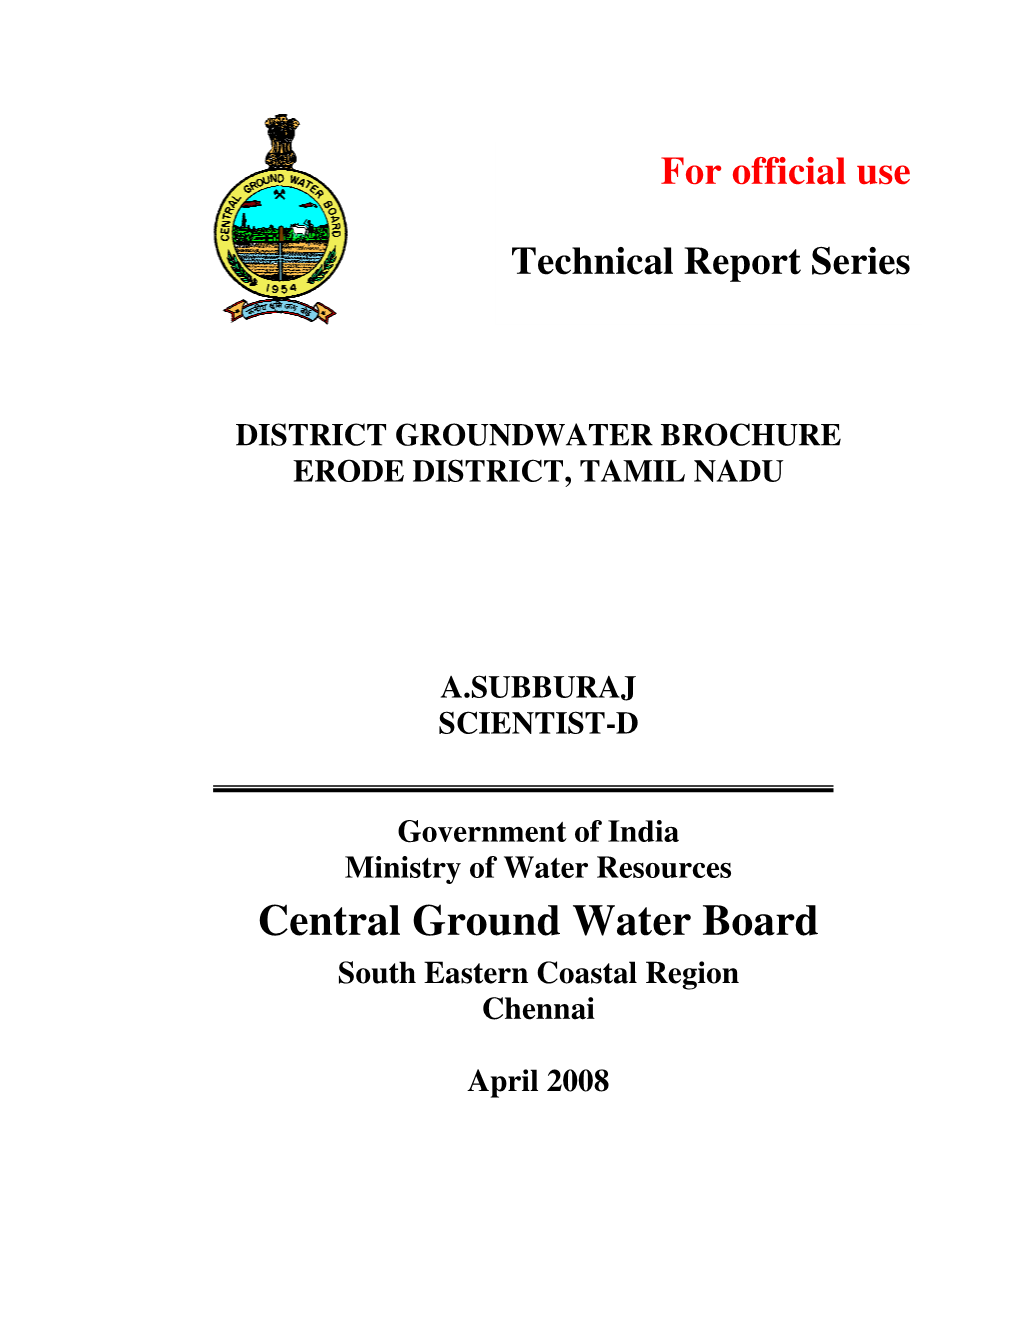 Erode District, Tamil Nadu